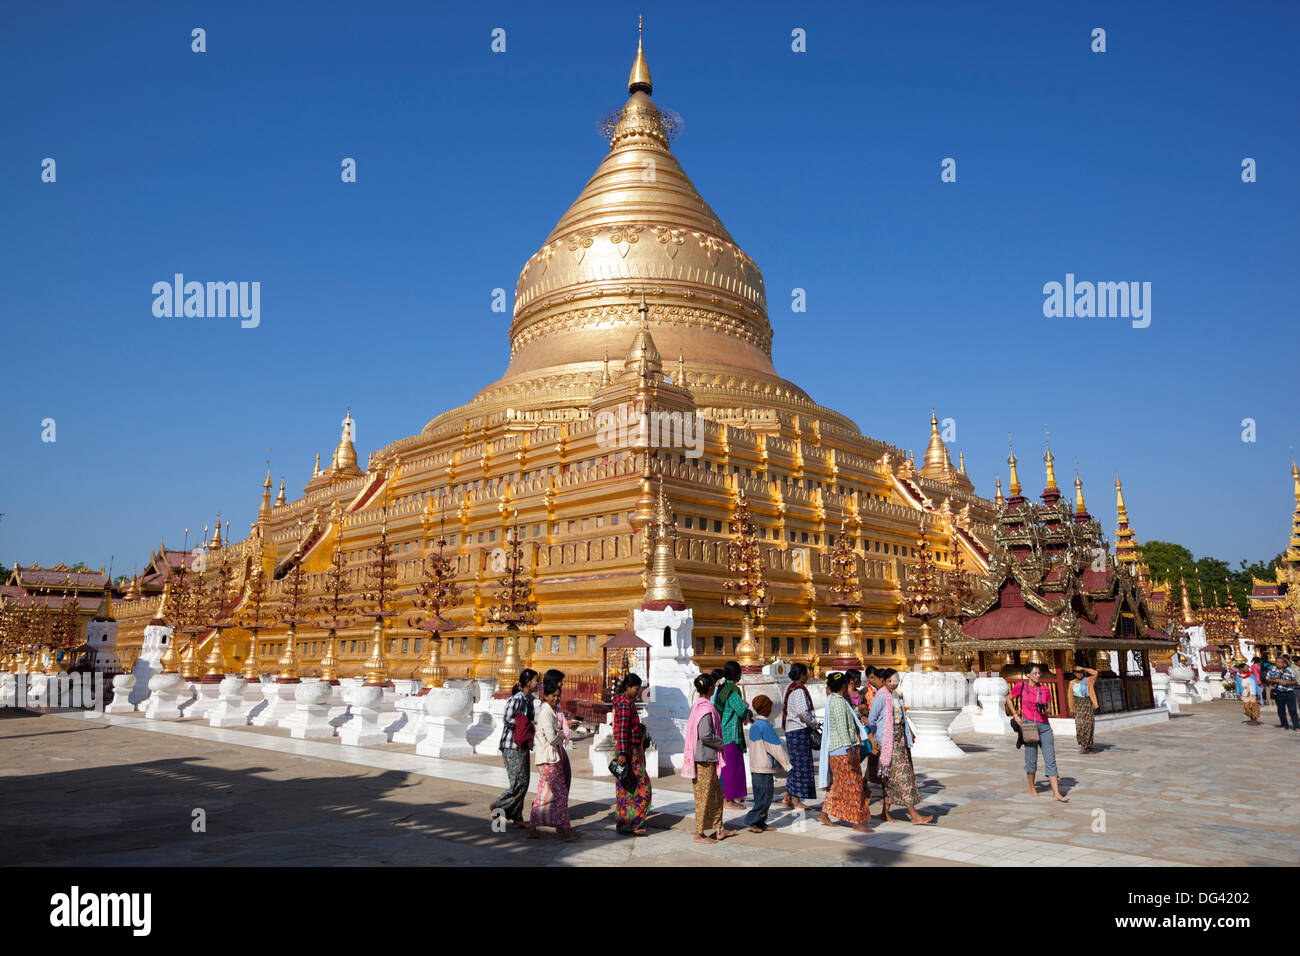 Shwezigon Pagoda, Bagan, Central Myanmar, Myanmar (Burma), Asia Stock Photo